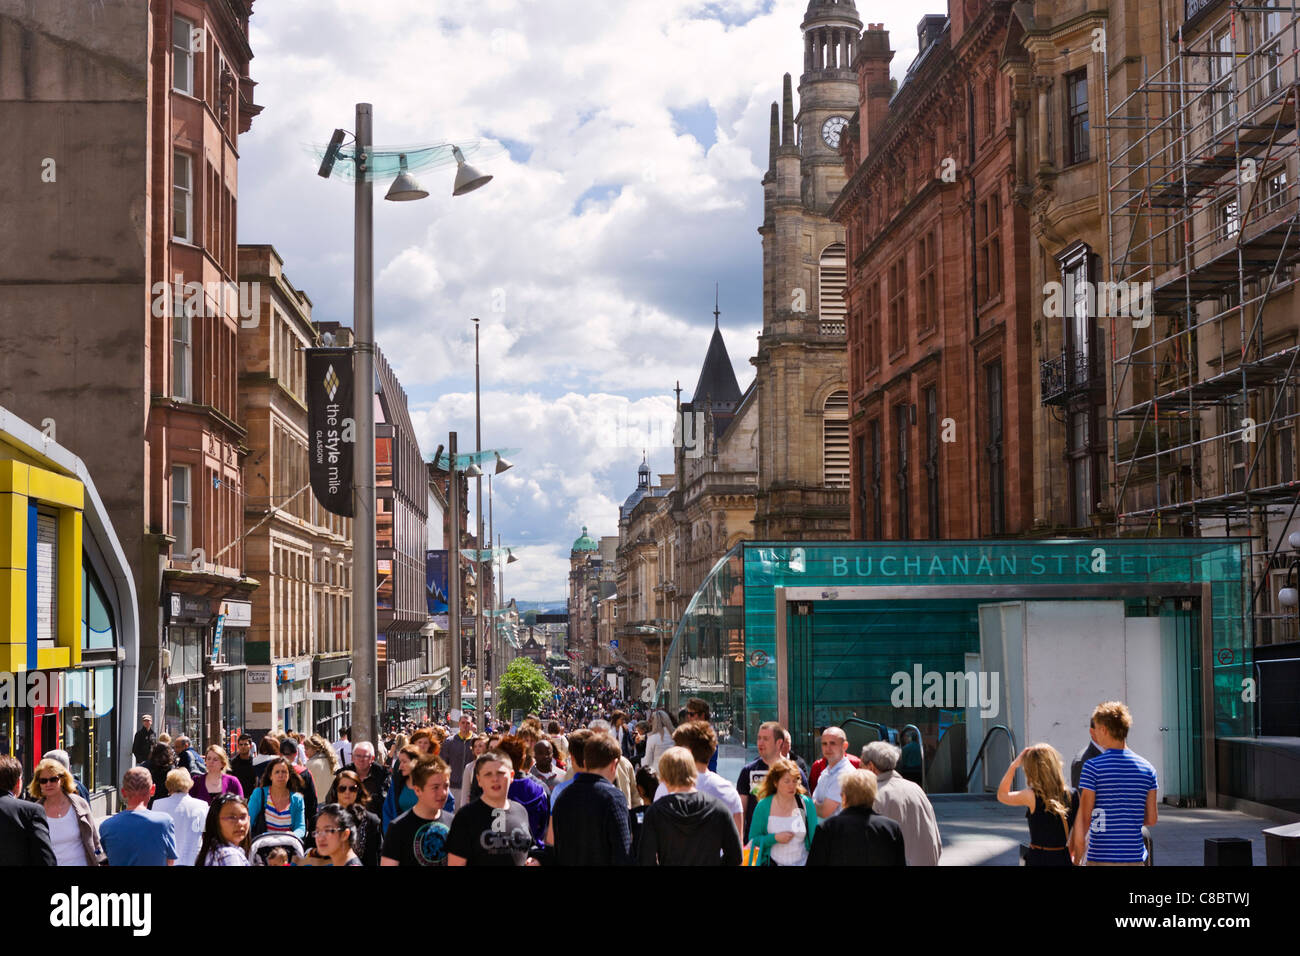 View down Buchanan Street from the Sauchiehall Street end, Glasgow, Scotland, UK Stock Photo